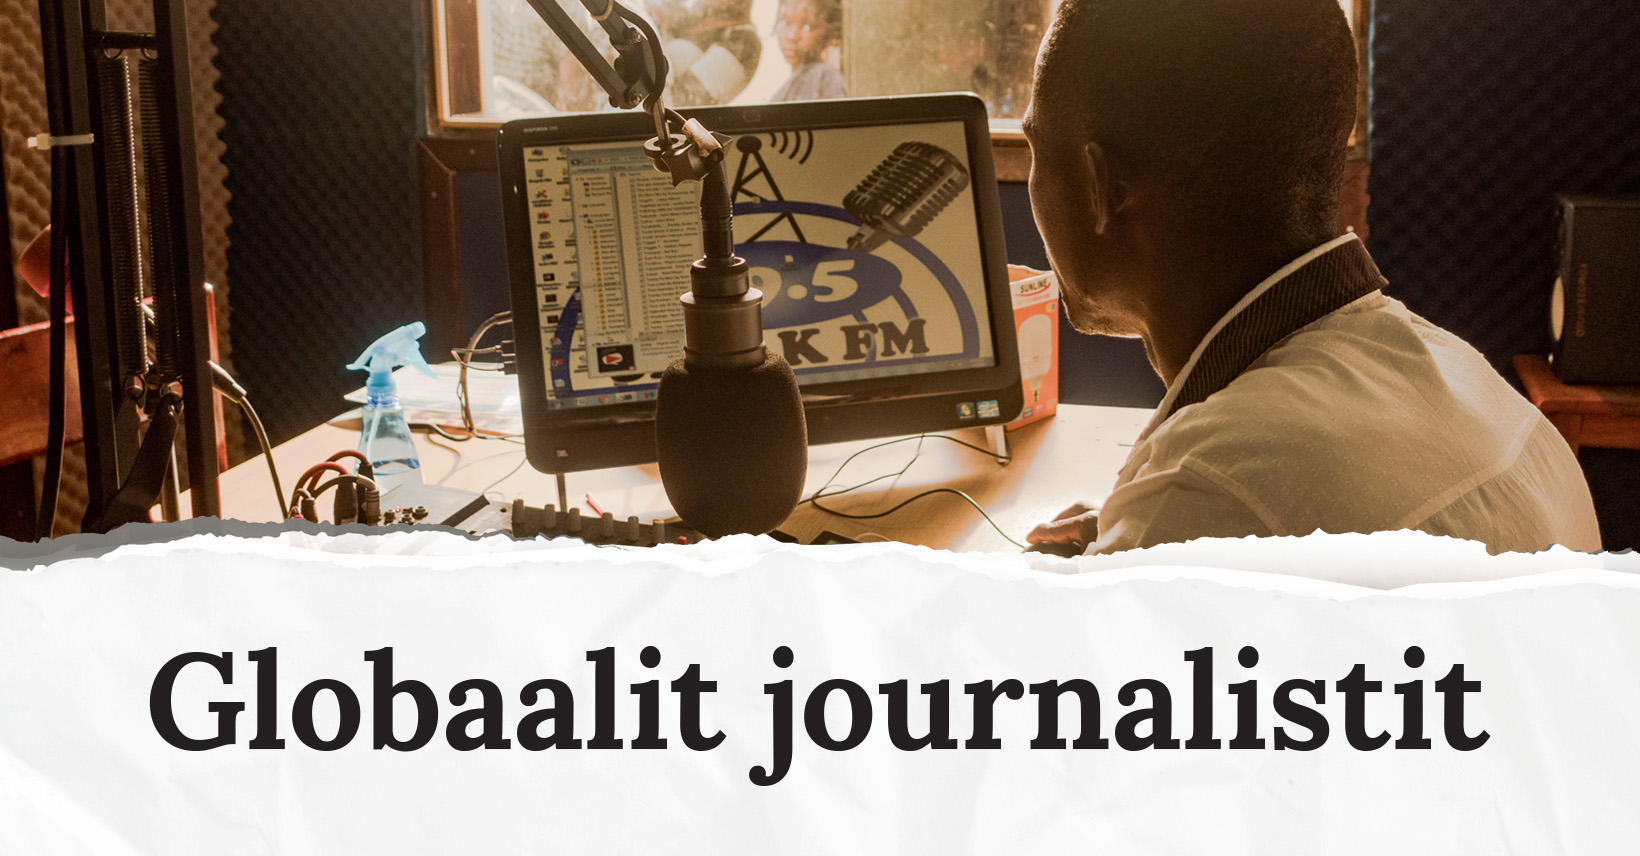 Globaalit journalistit -avauskuva